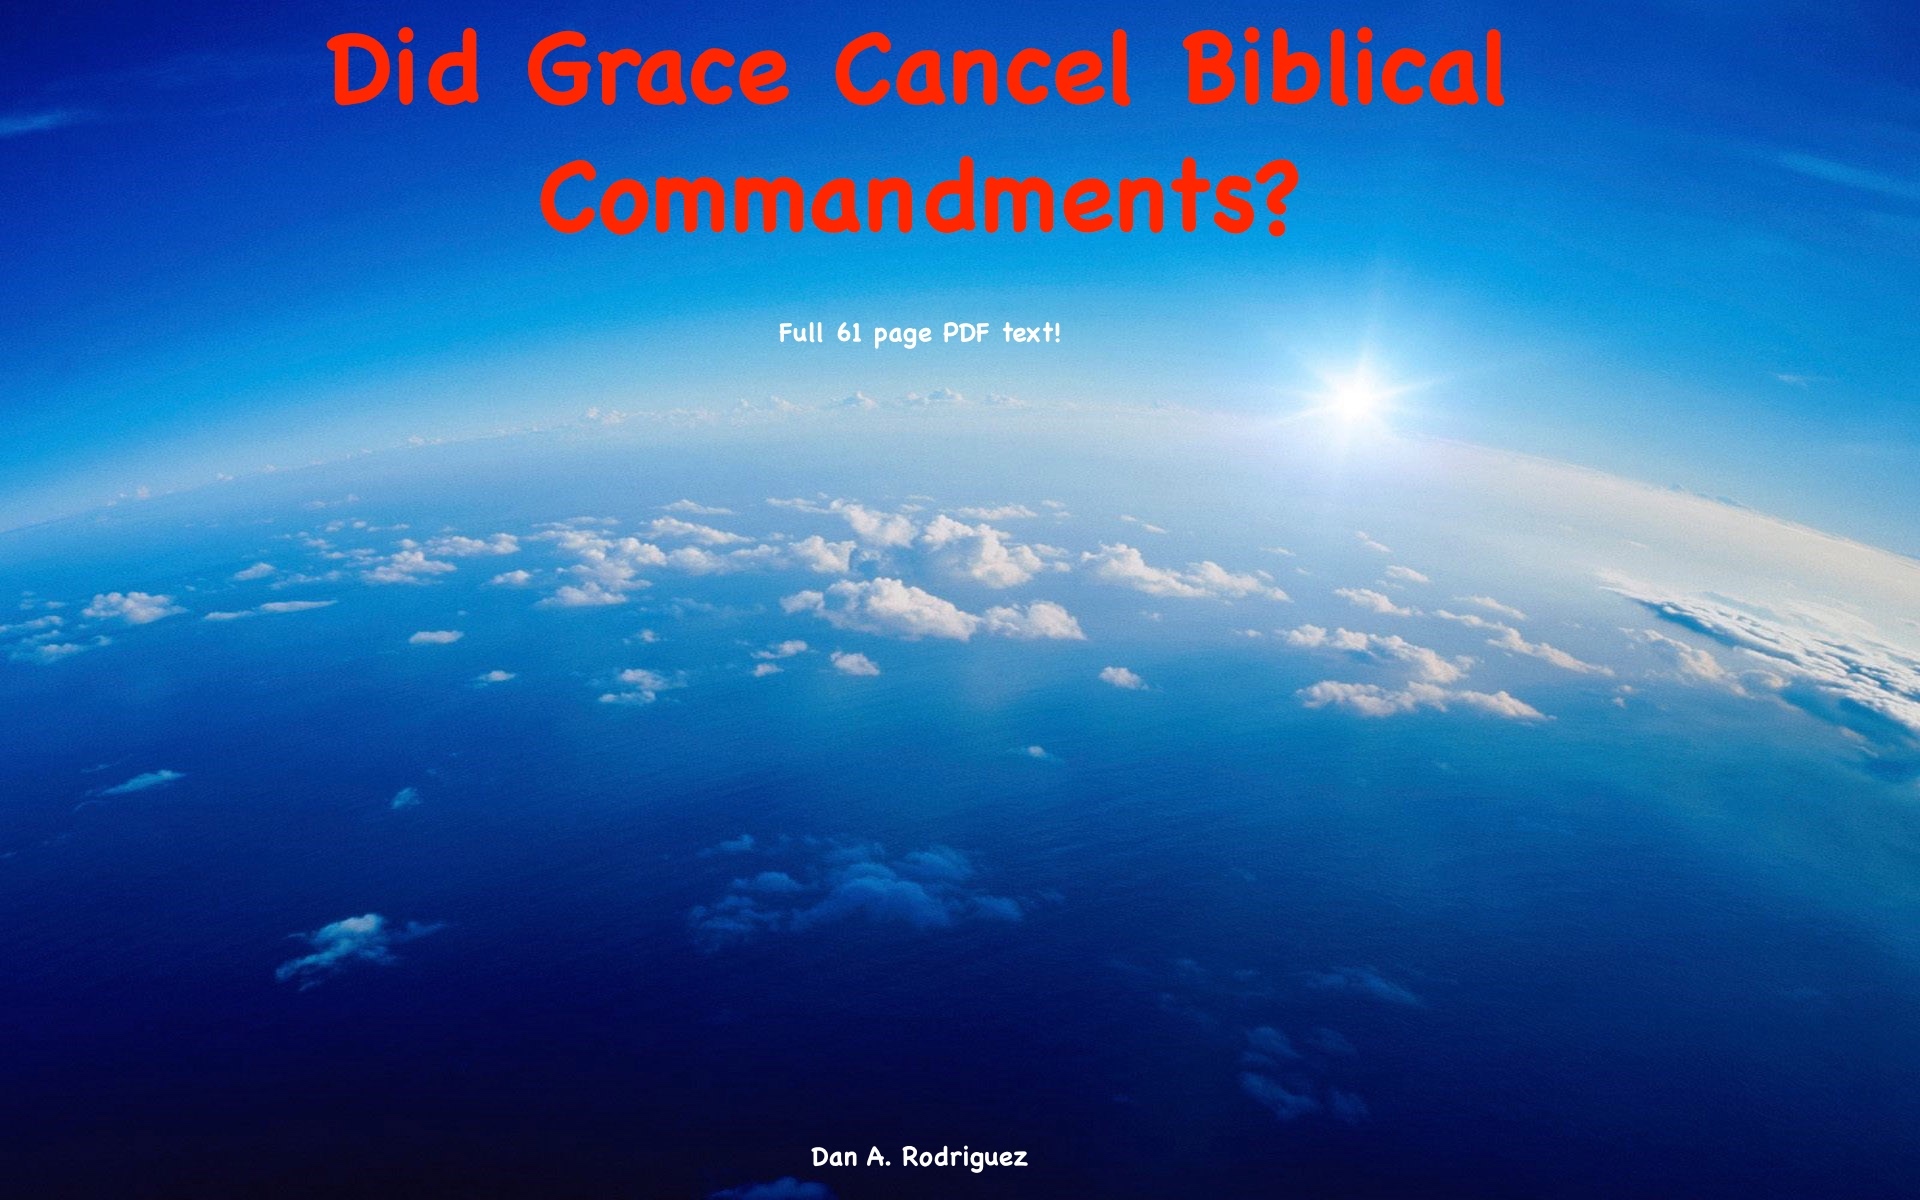 did_grace_cancel_biblical_cimmandments-_full_61_page_PDF_text.jpg